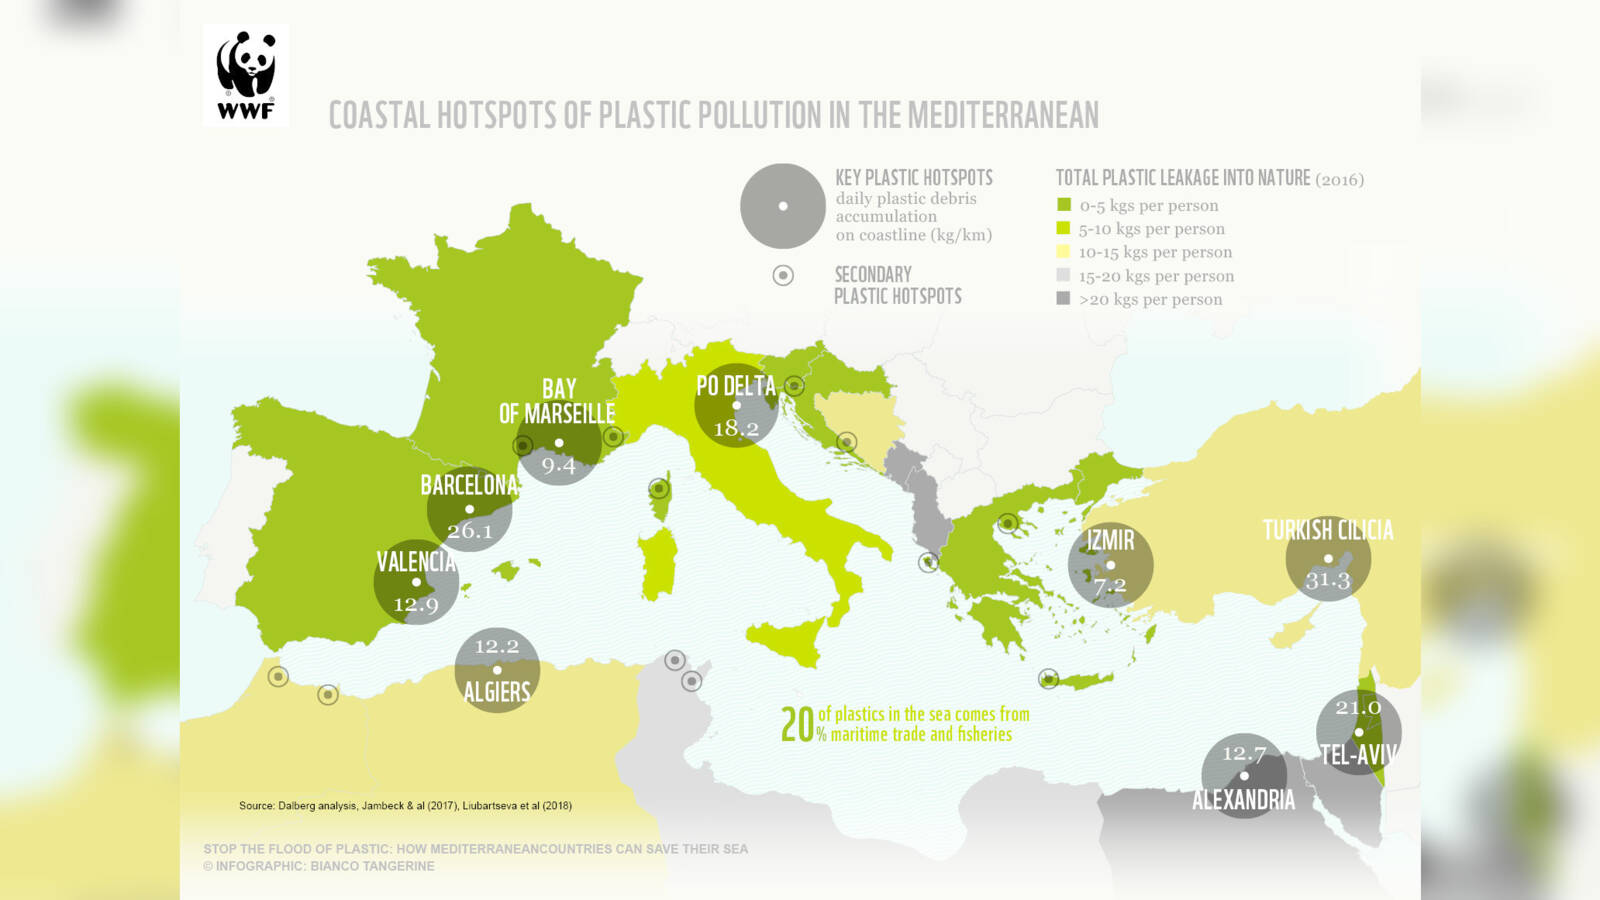 Plastic pollution in the Mediterranean